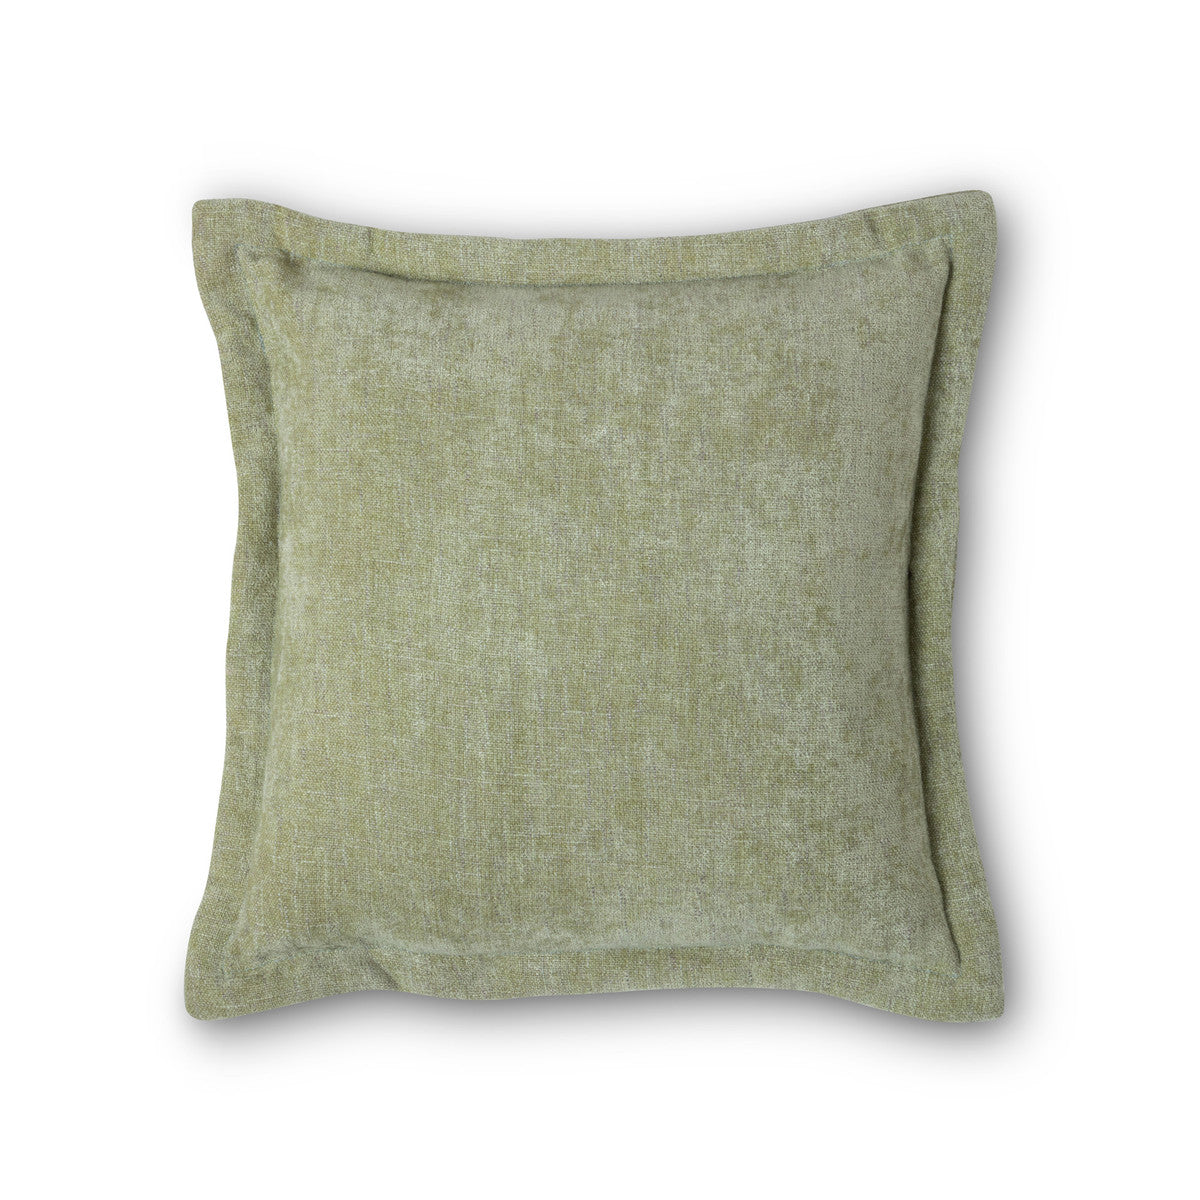 front of pistachio green velvet throw pillow on white backgound